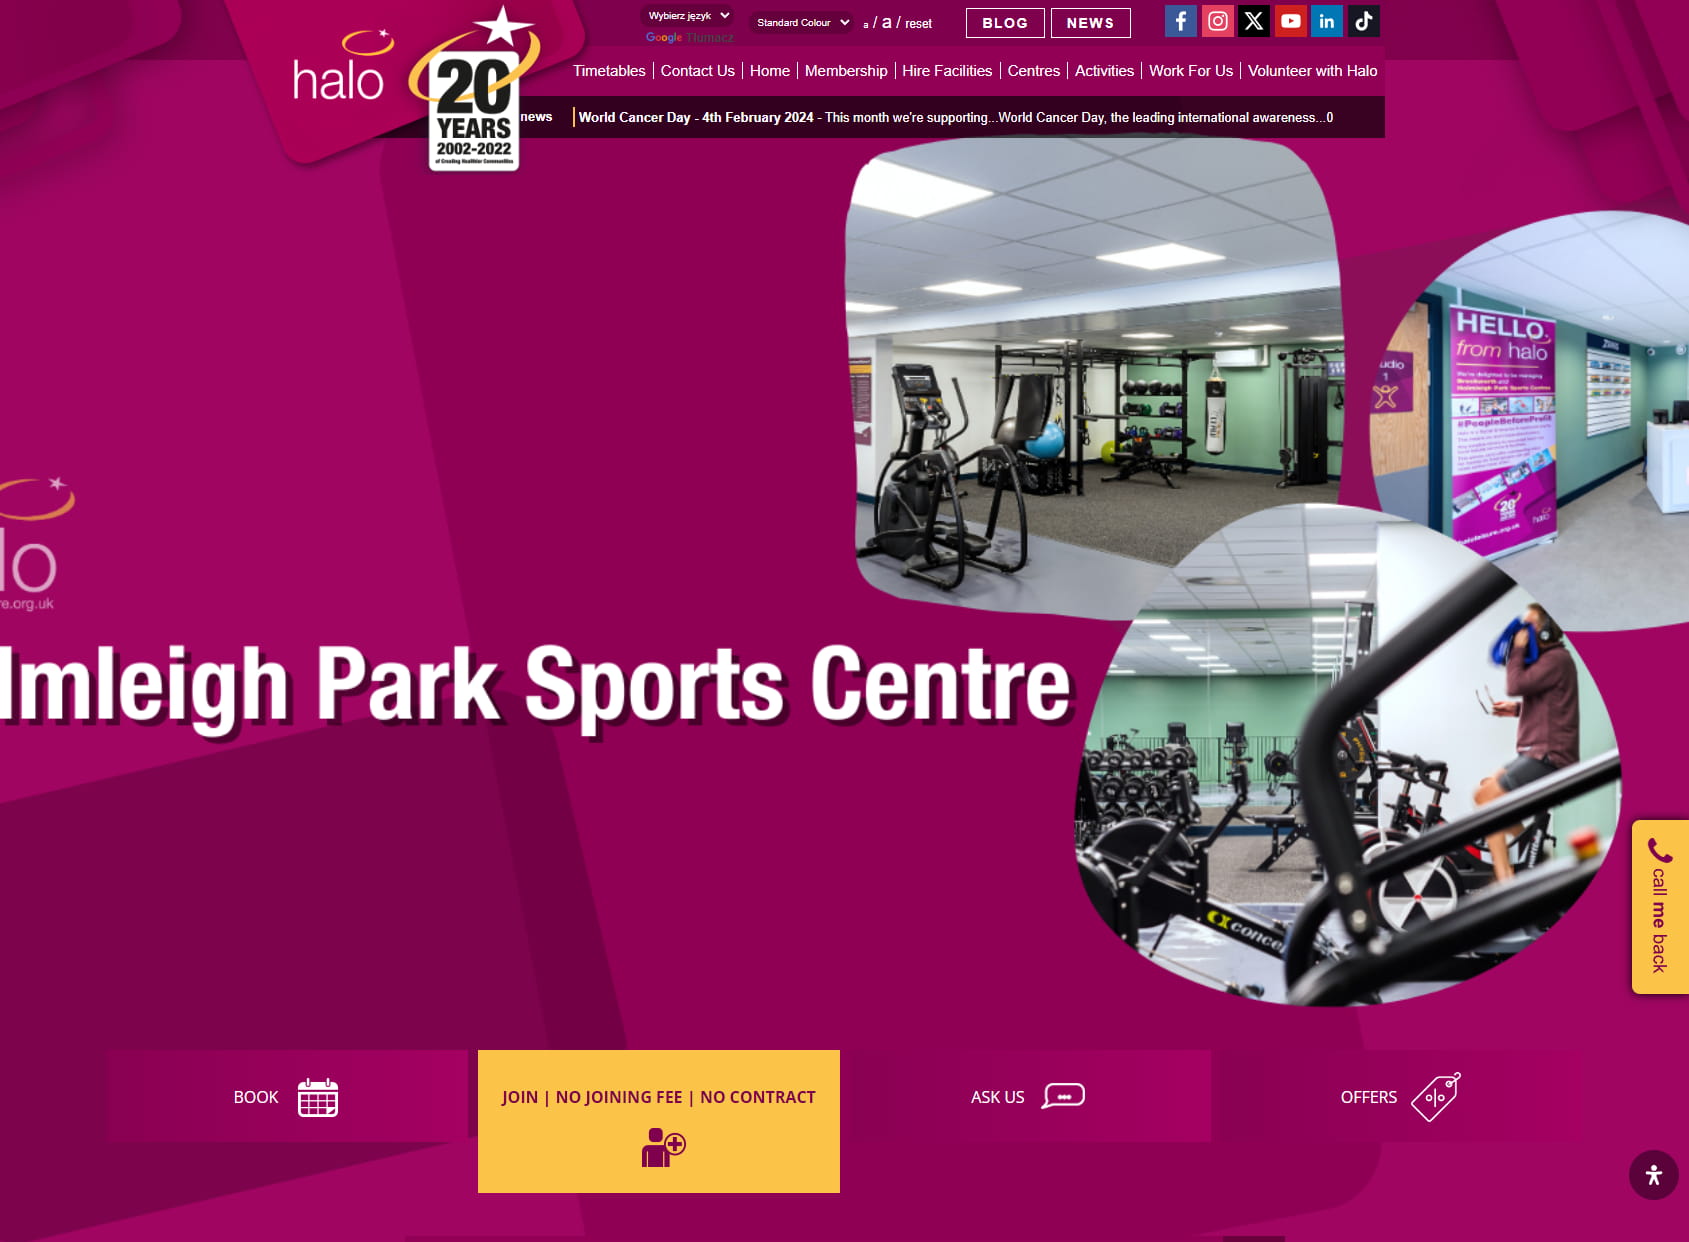 Halo Holmleigh Park Sports Centre